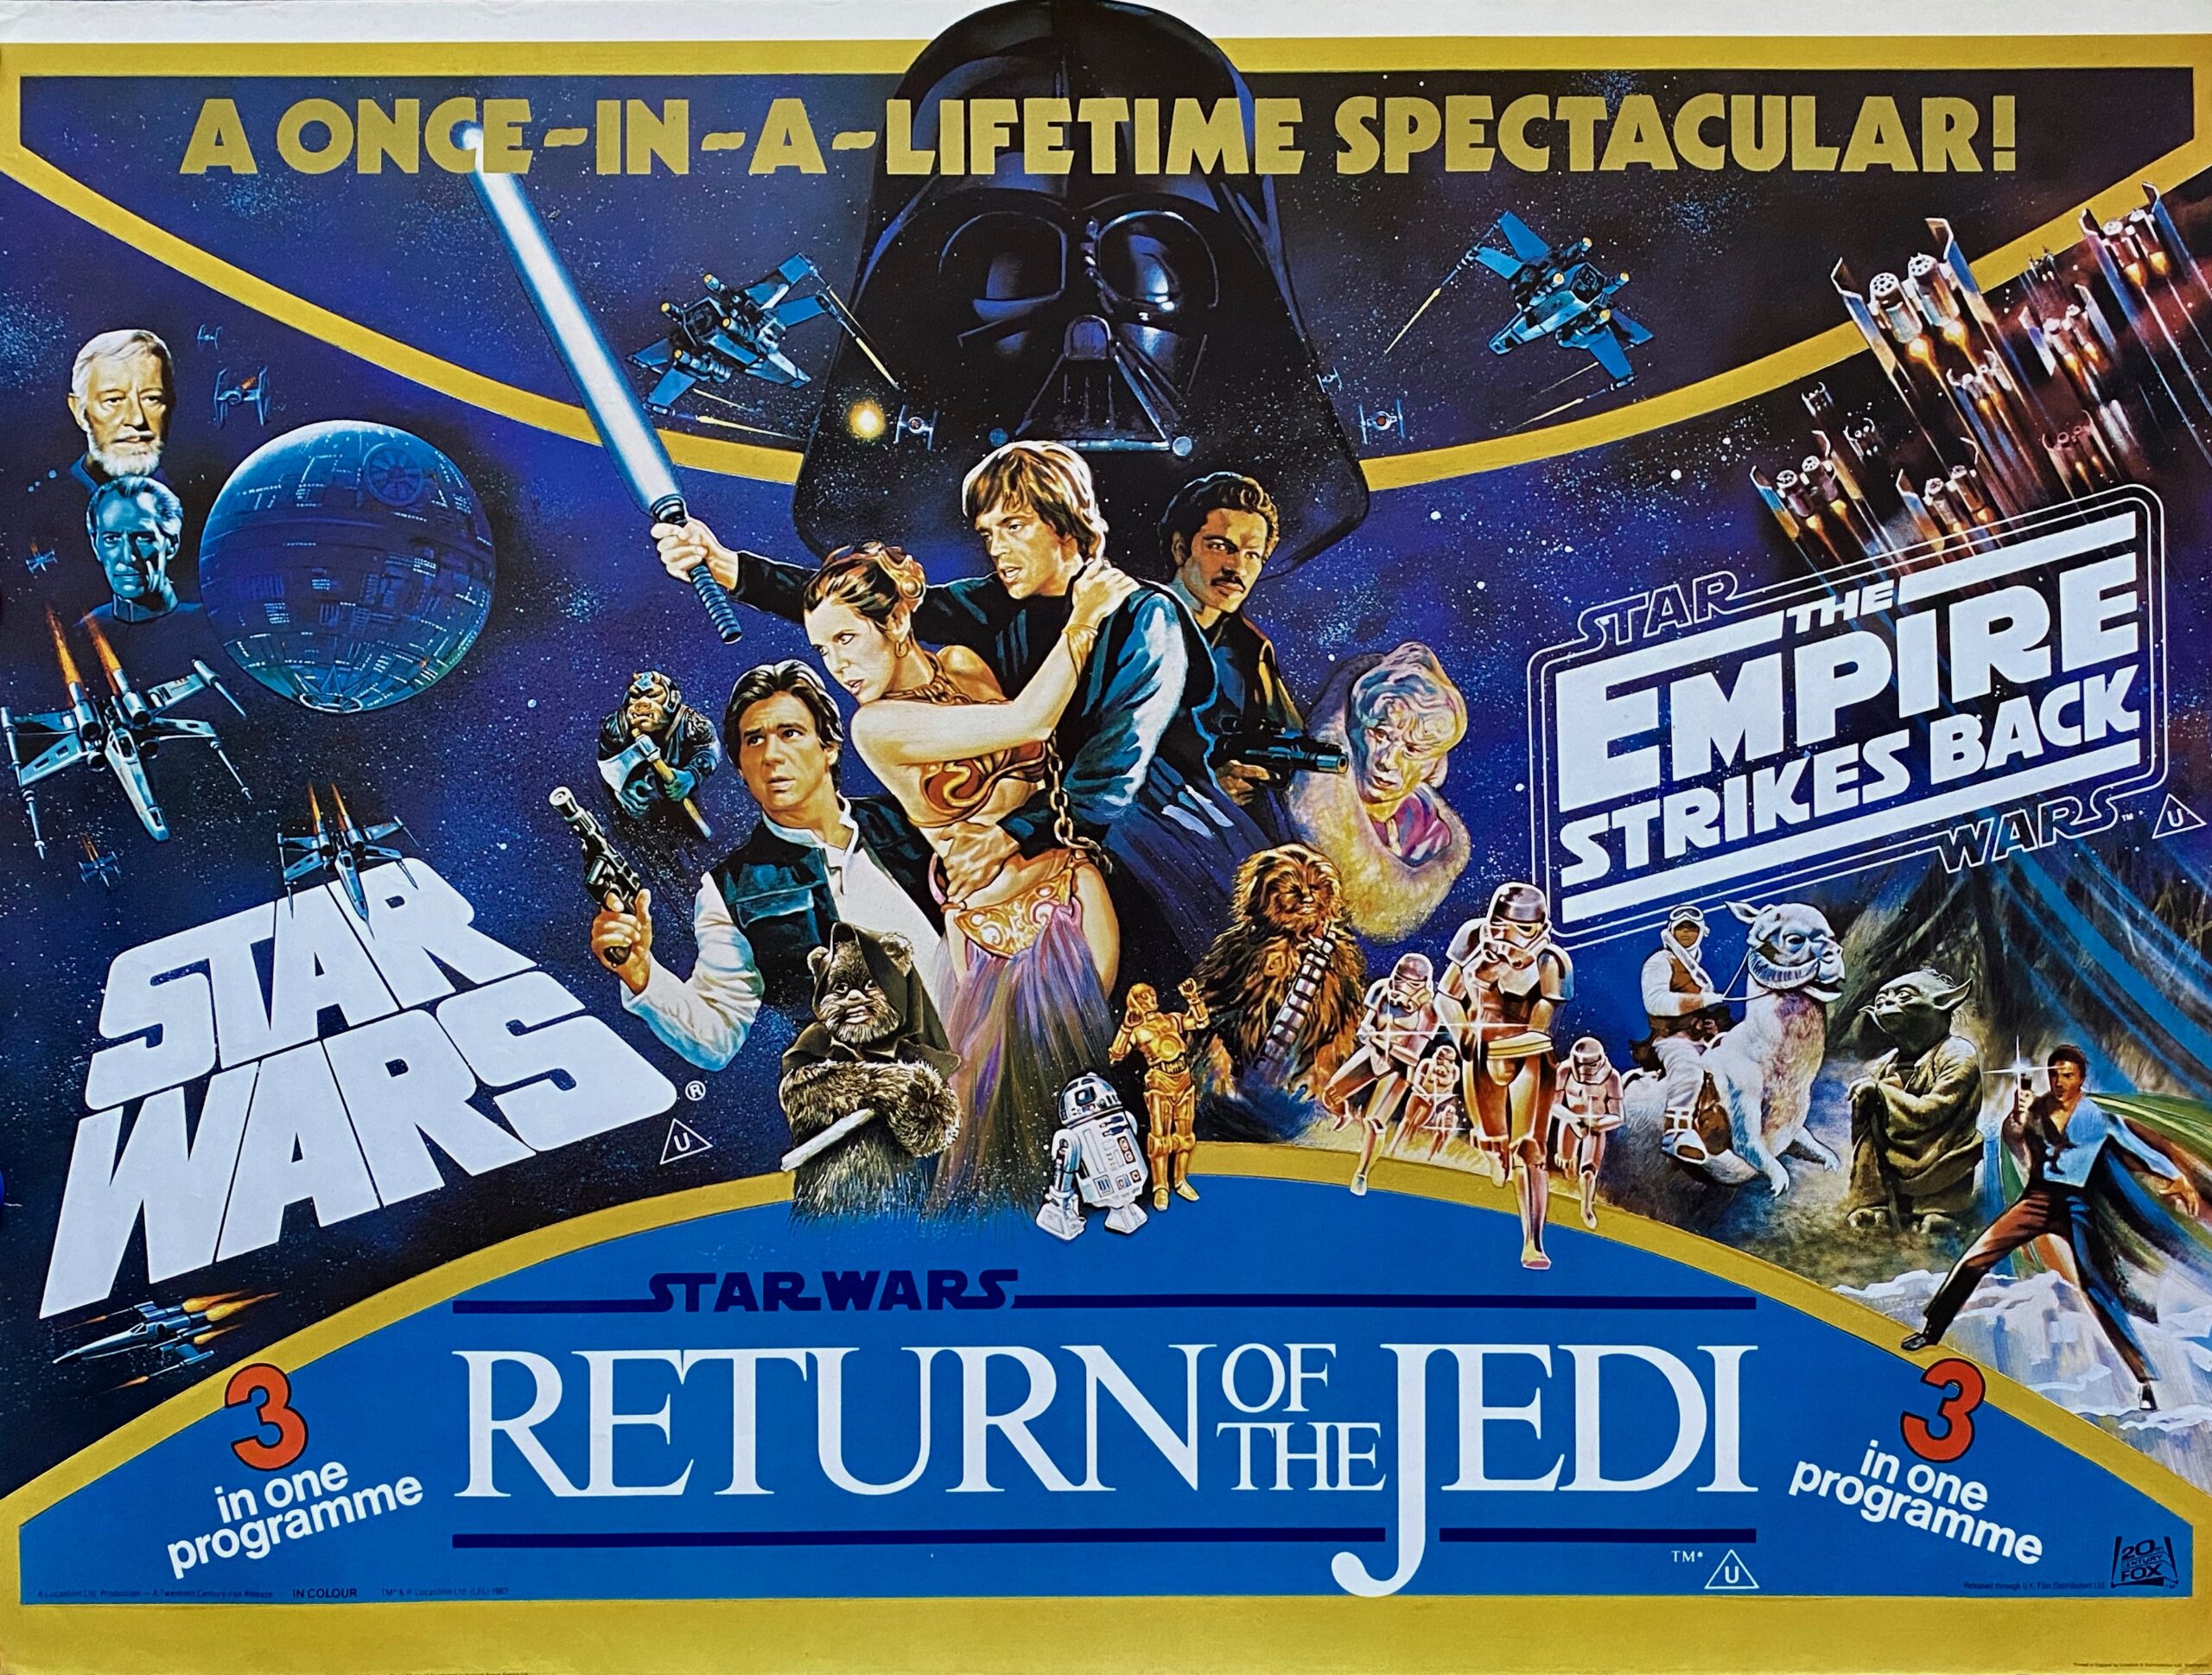 Star Wars Original Trilogy: A New Hope, Empire Strikes Back